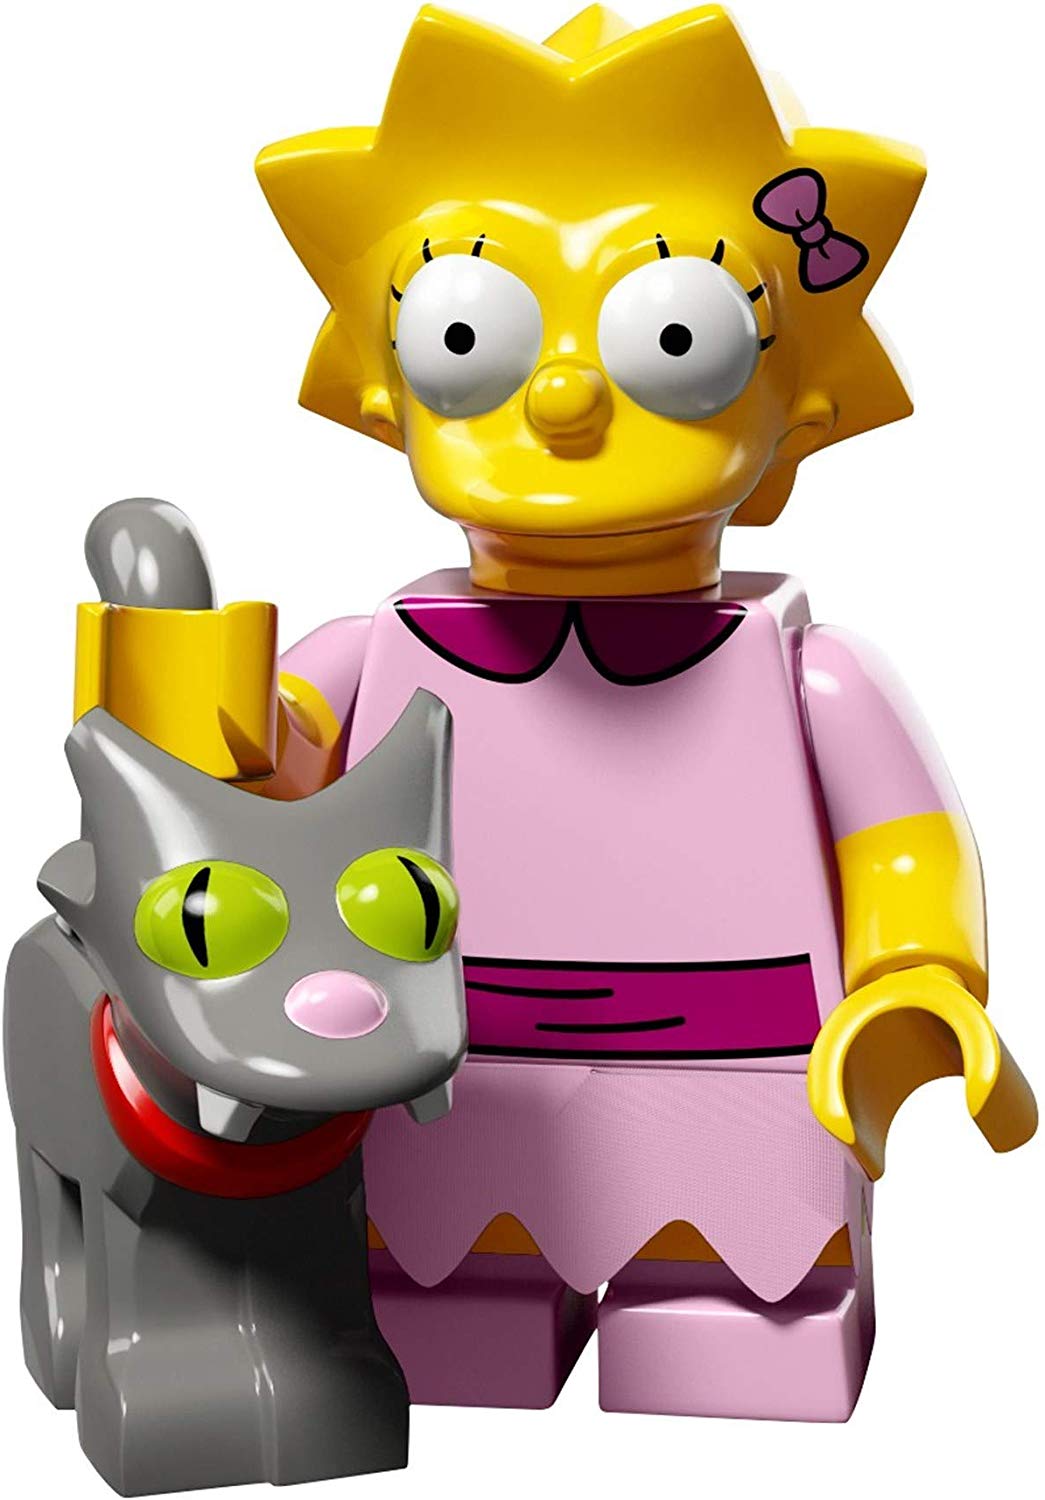 Lego Simpsons Series 2 Collectible Minif Igure 71009 – Lisa Simpson (Snowba